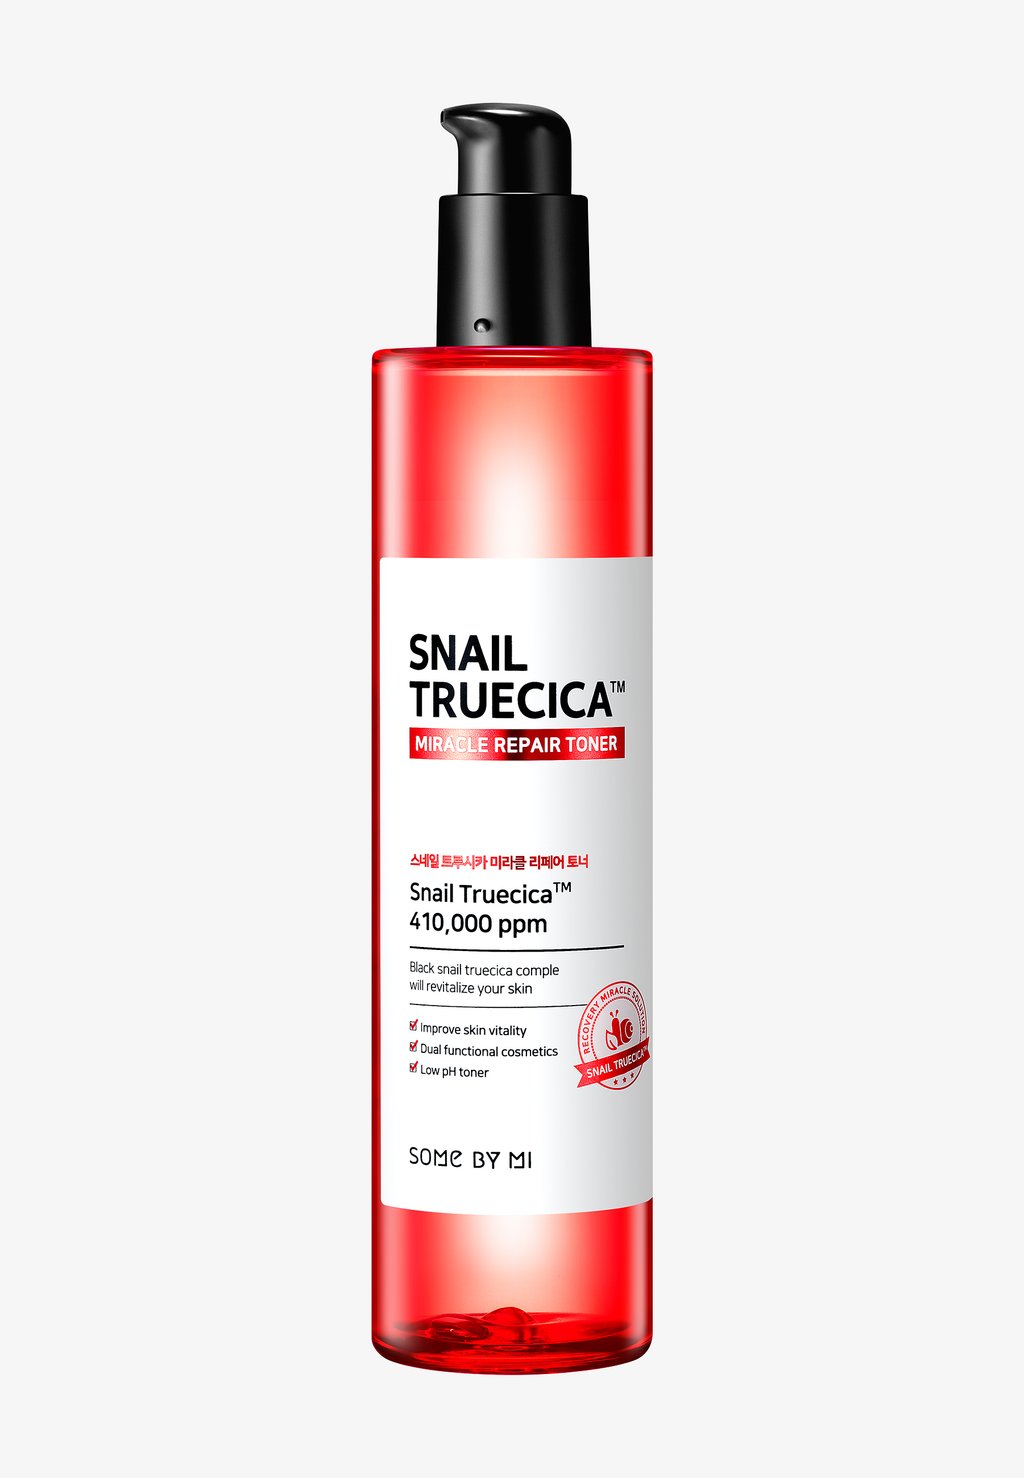 somebymi snail truecica miracle repair toner 135ml Ночные процедуры Snail Truecica Miracle Repair Toner SOME BY MI